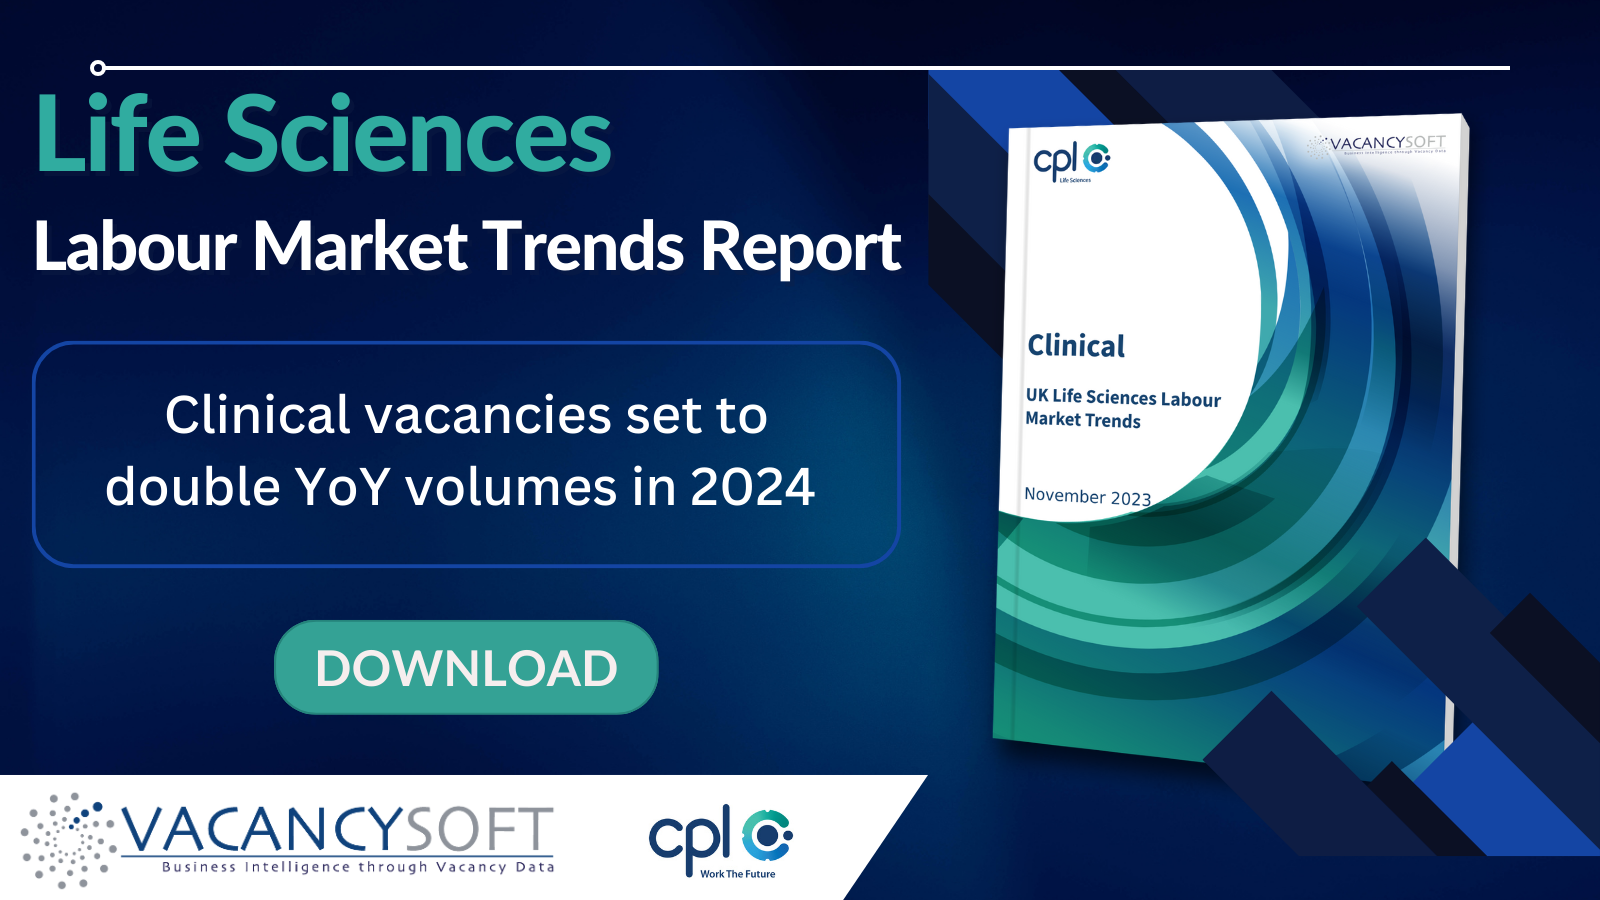 Clinical – UK Life Sciences Labour Market Trends, November 2023